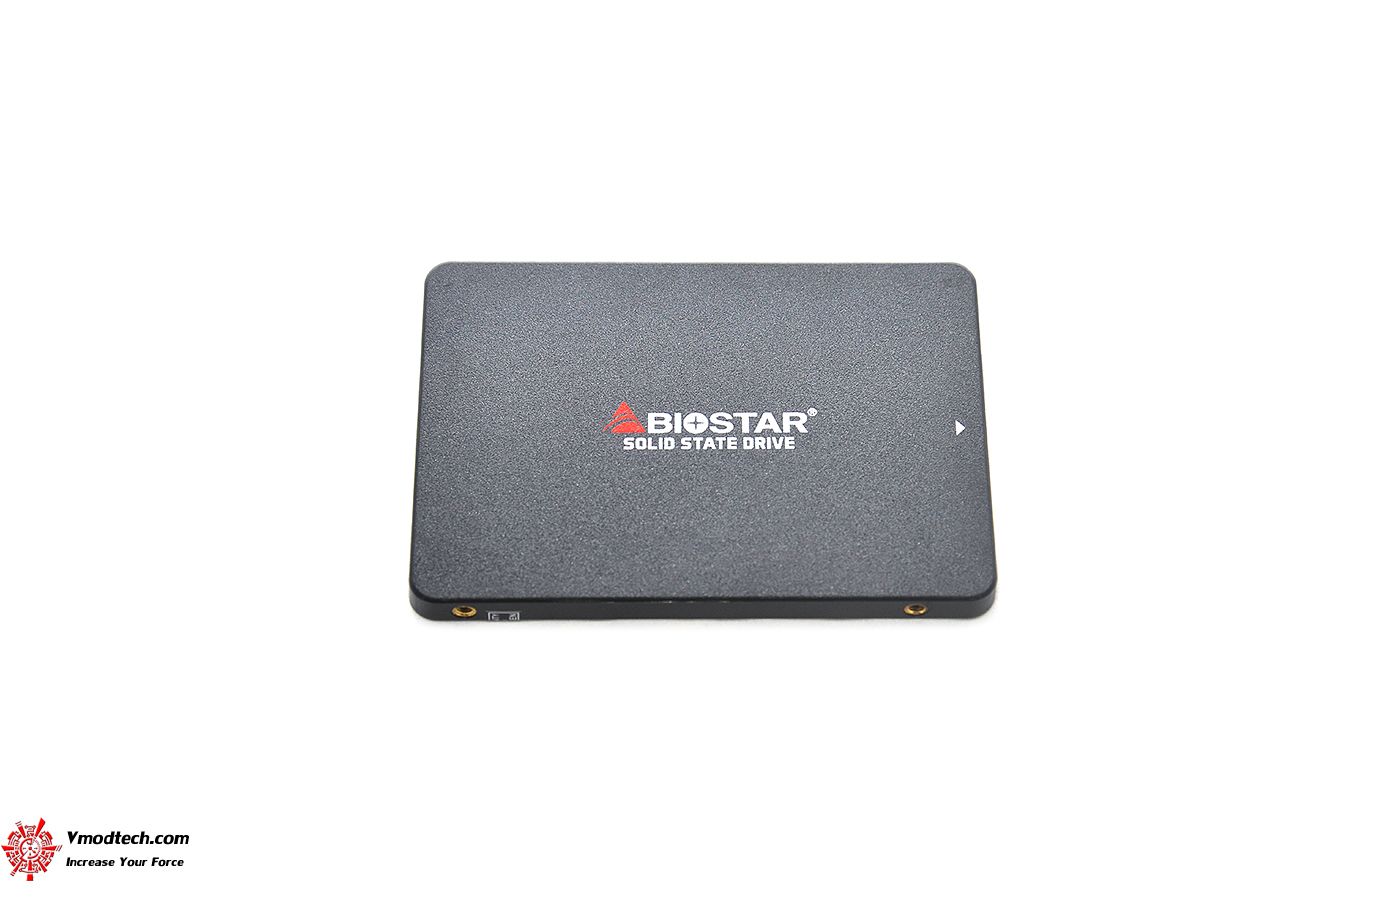 dsc 9929 Biostar SSD S130 512GB Review